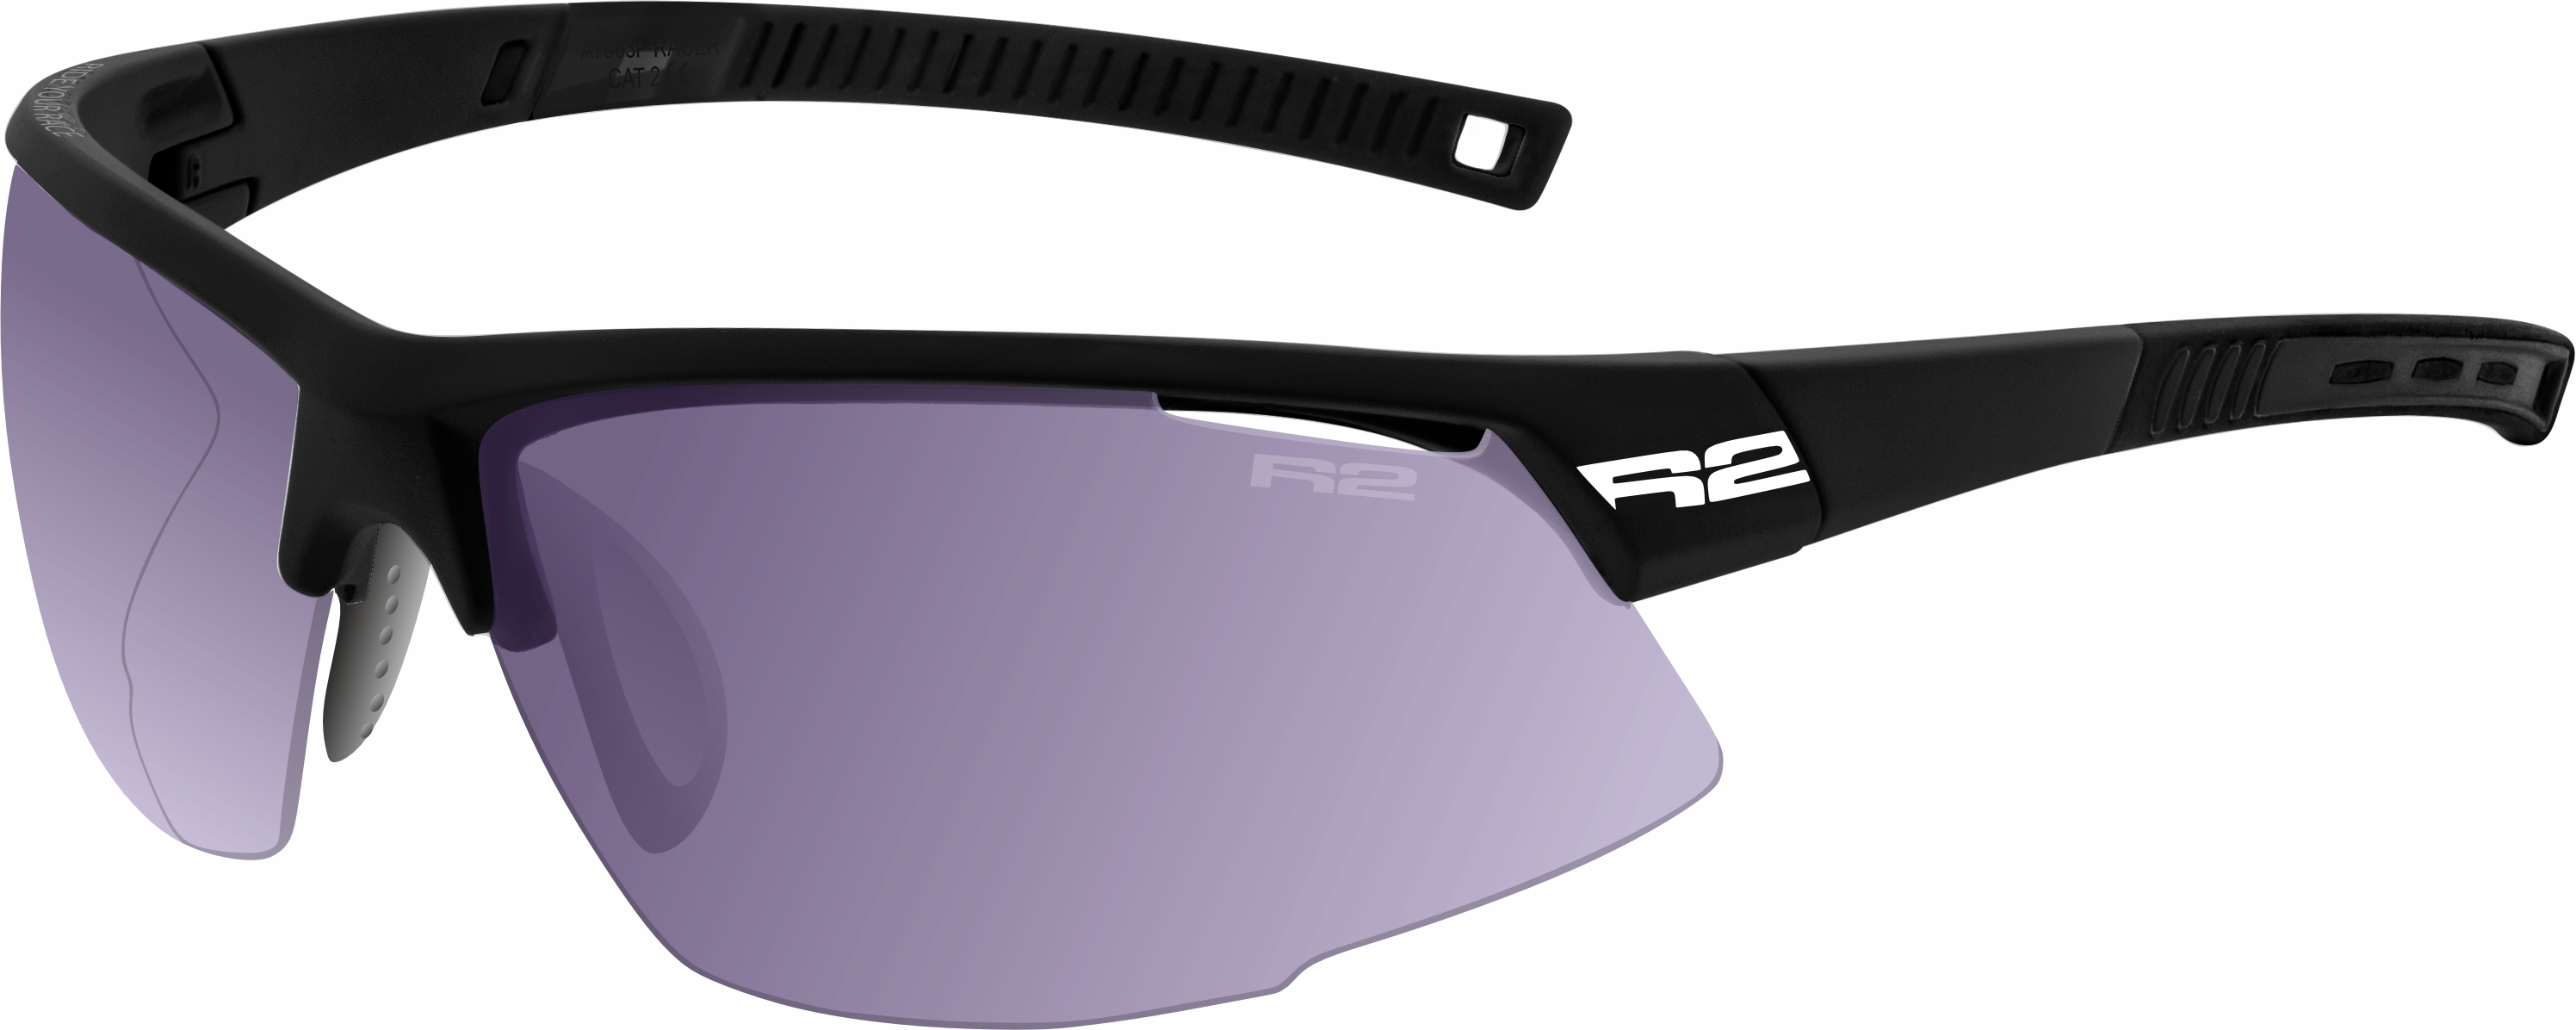 Sport sunglasses R2 RACER AT063Z standard